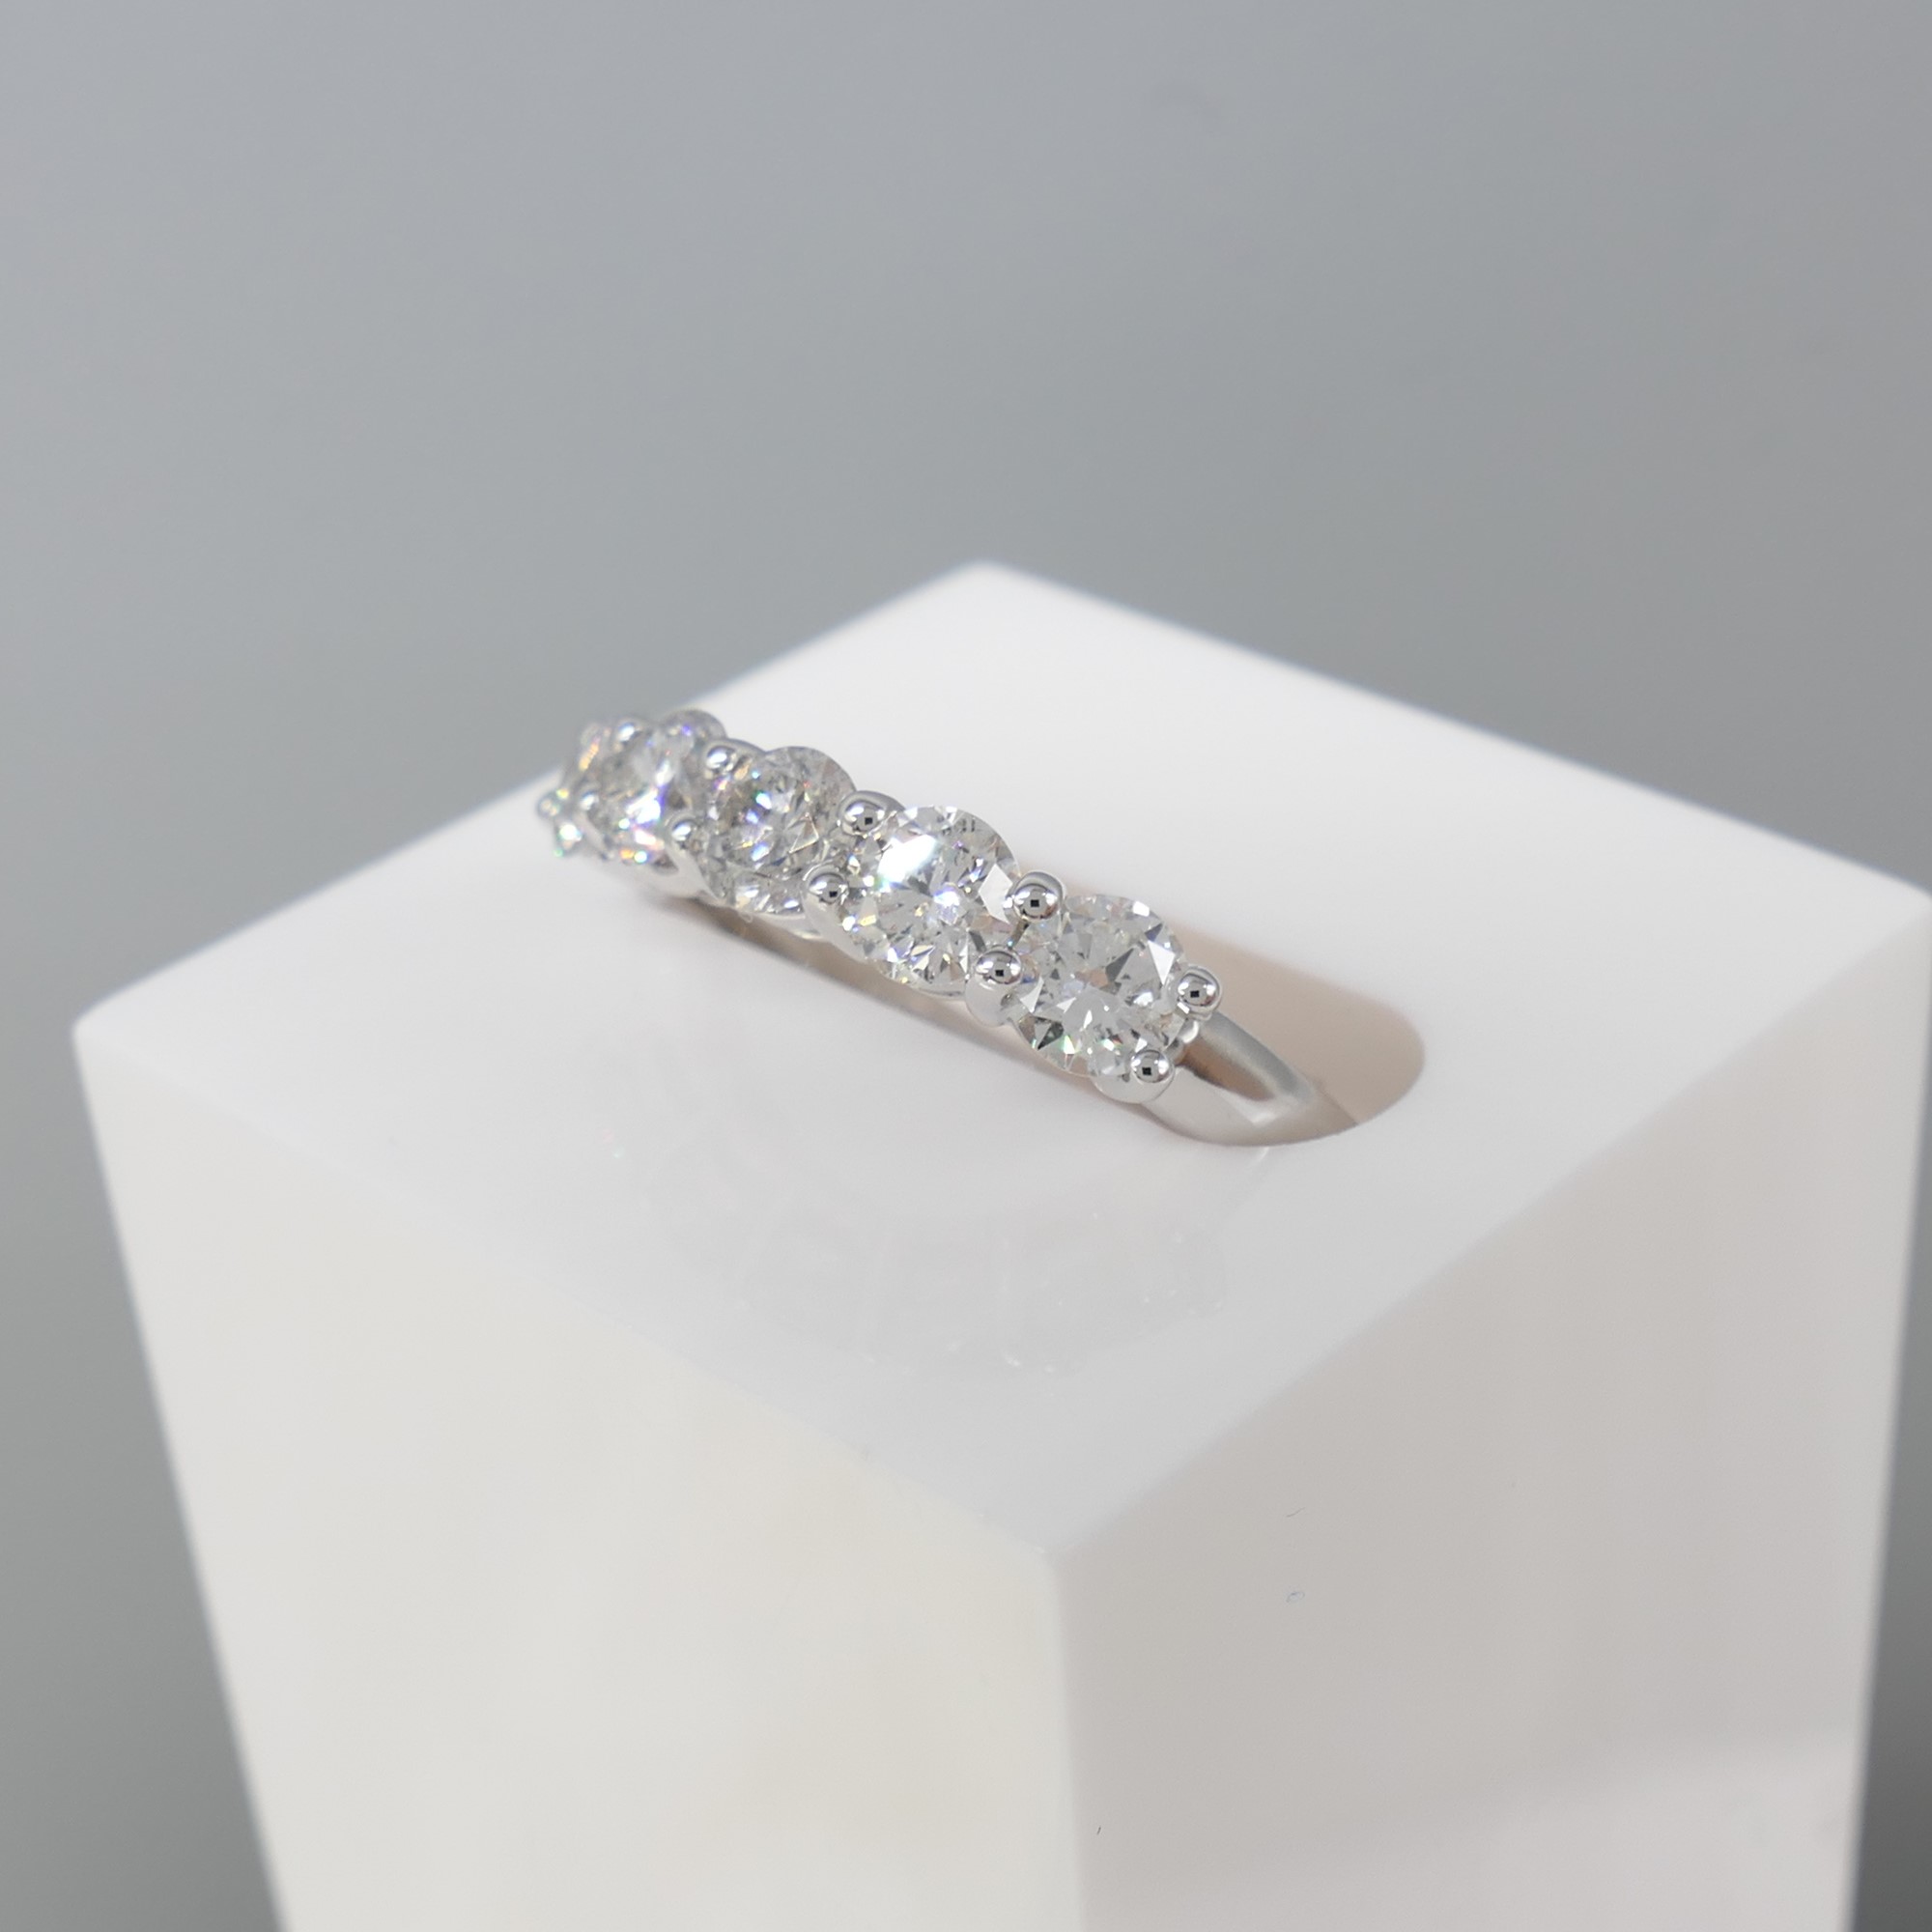 18K White Gold 1.09 Carat Round Brilliant-Cut Diamond 5-Stone Ring - Image 2 of 6